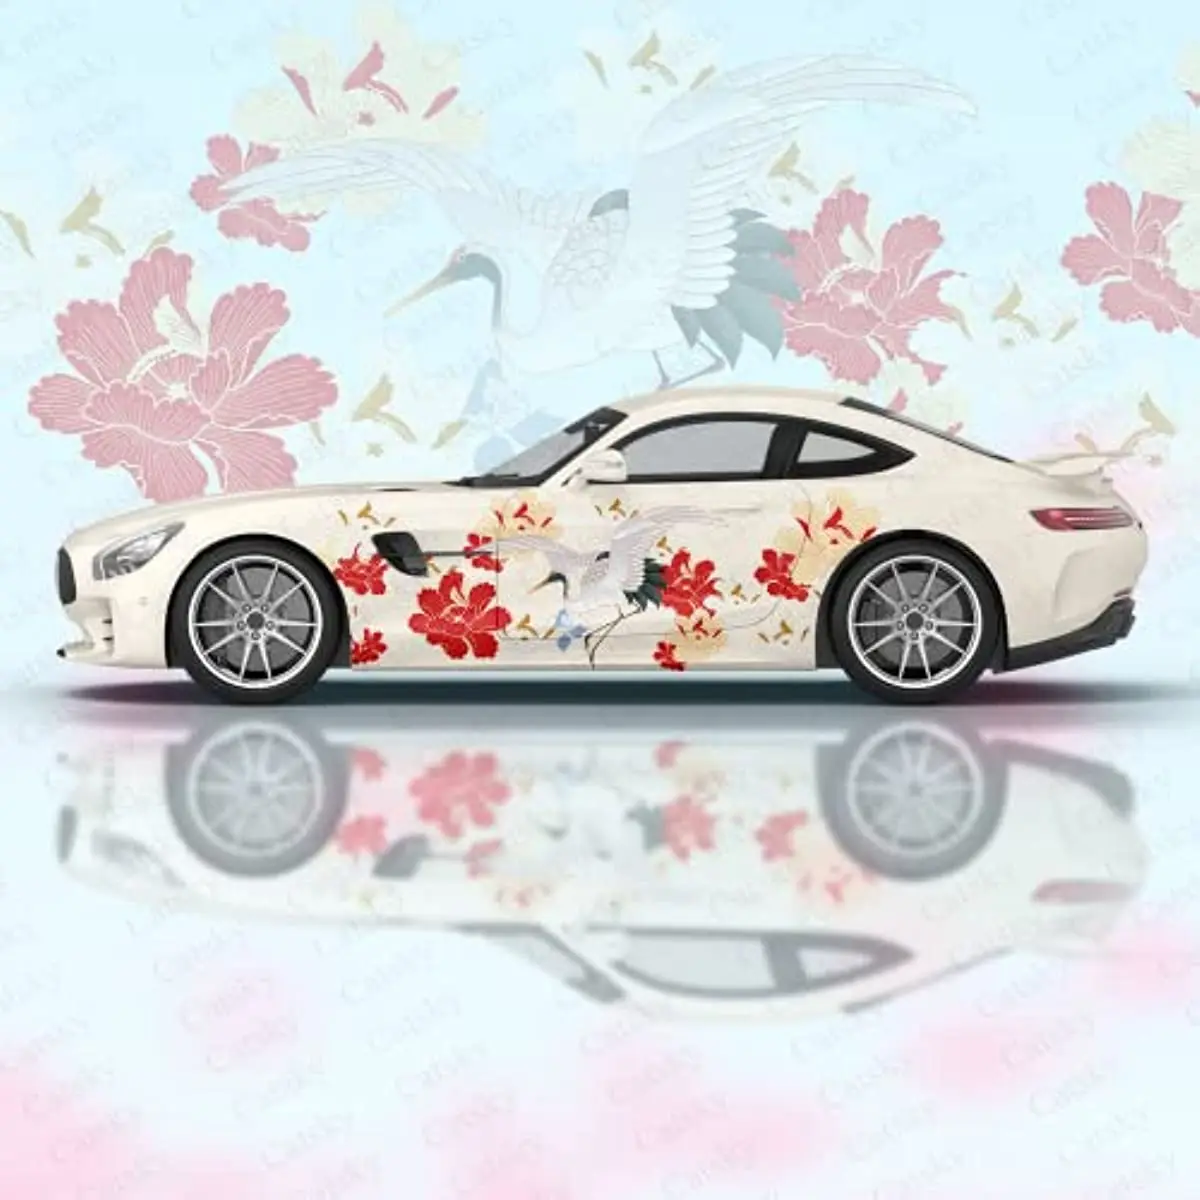 

Elegant Crane & Peony Car Decals - Premium Vinyl Floral Decorations for Automobiles, Windows & Bumpers, Enhance